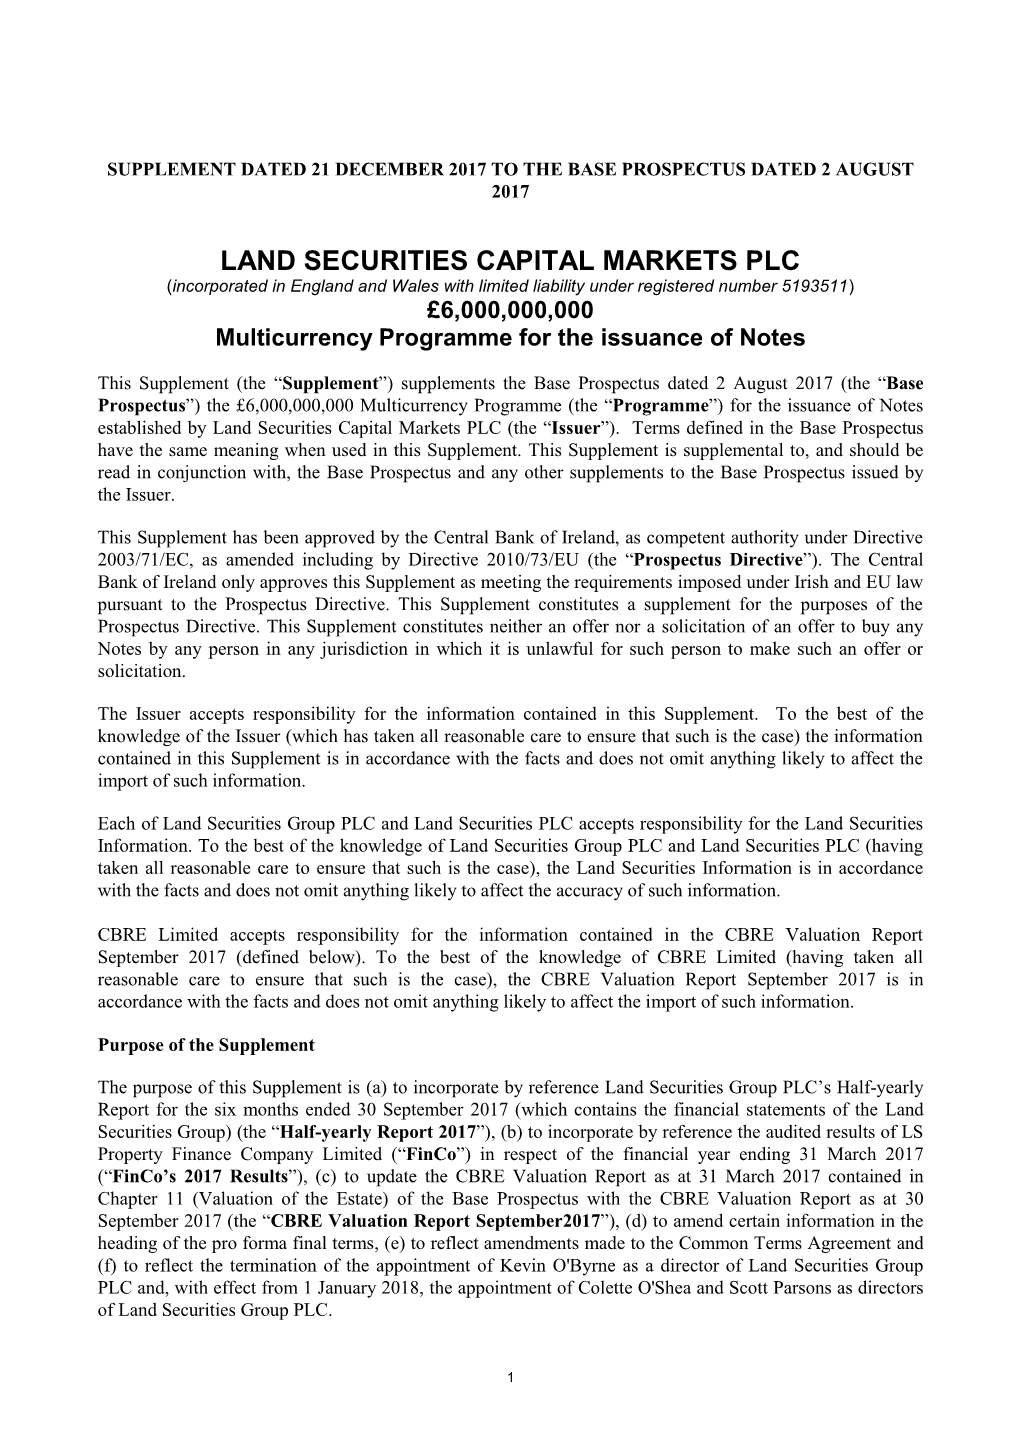 Land Securities Capital Markets